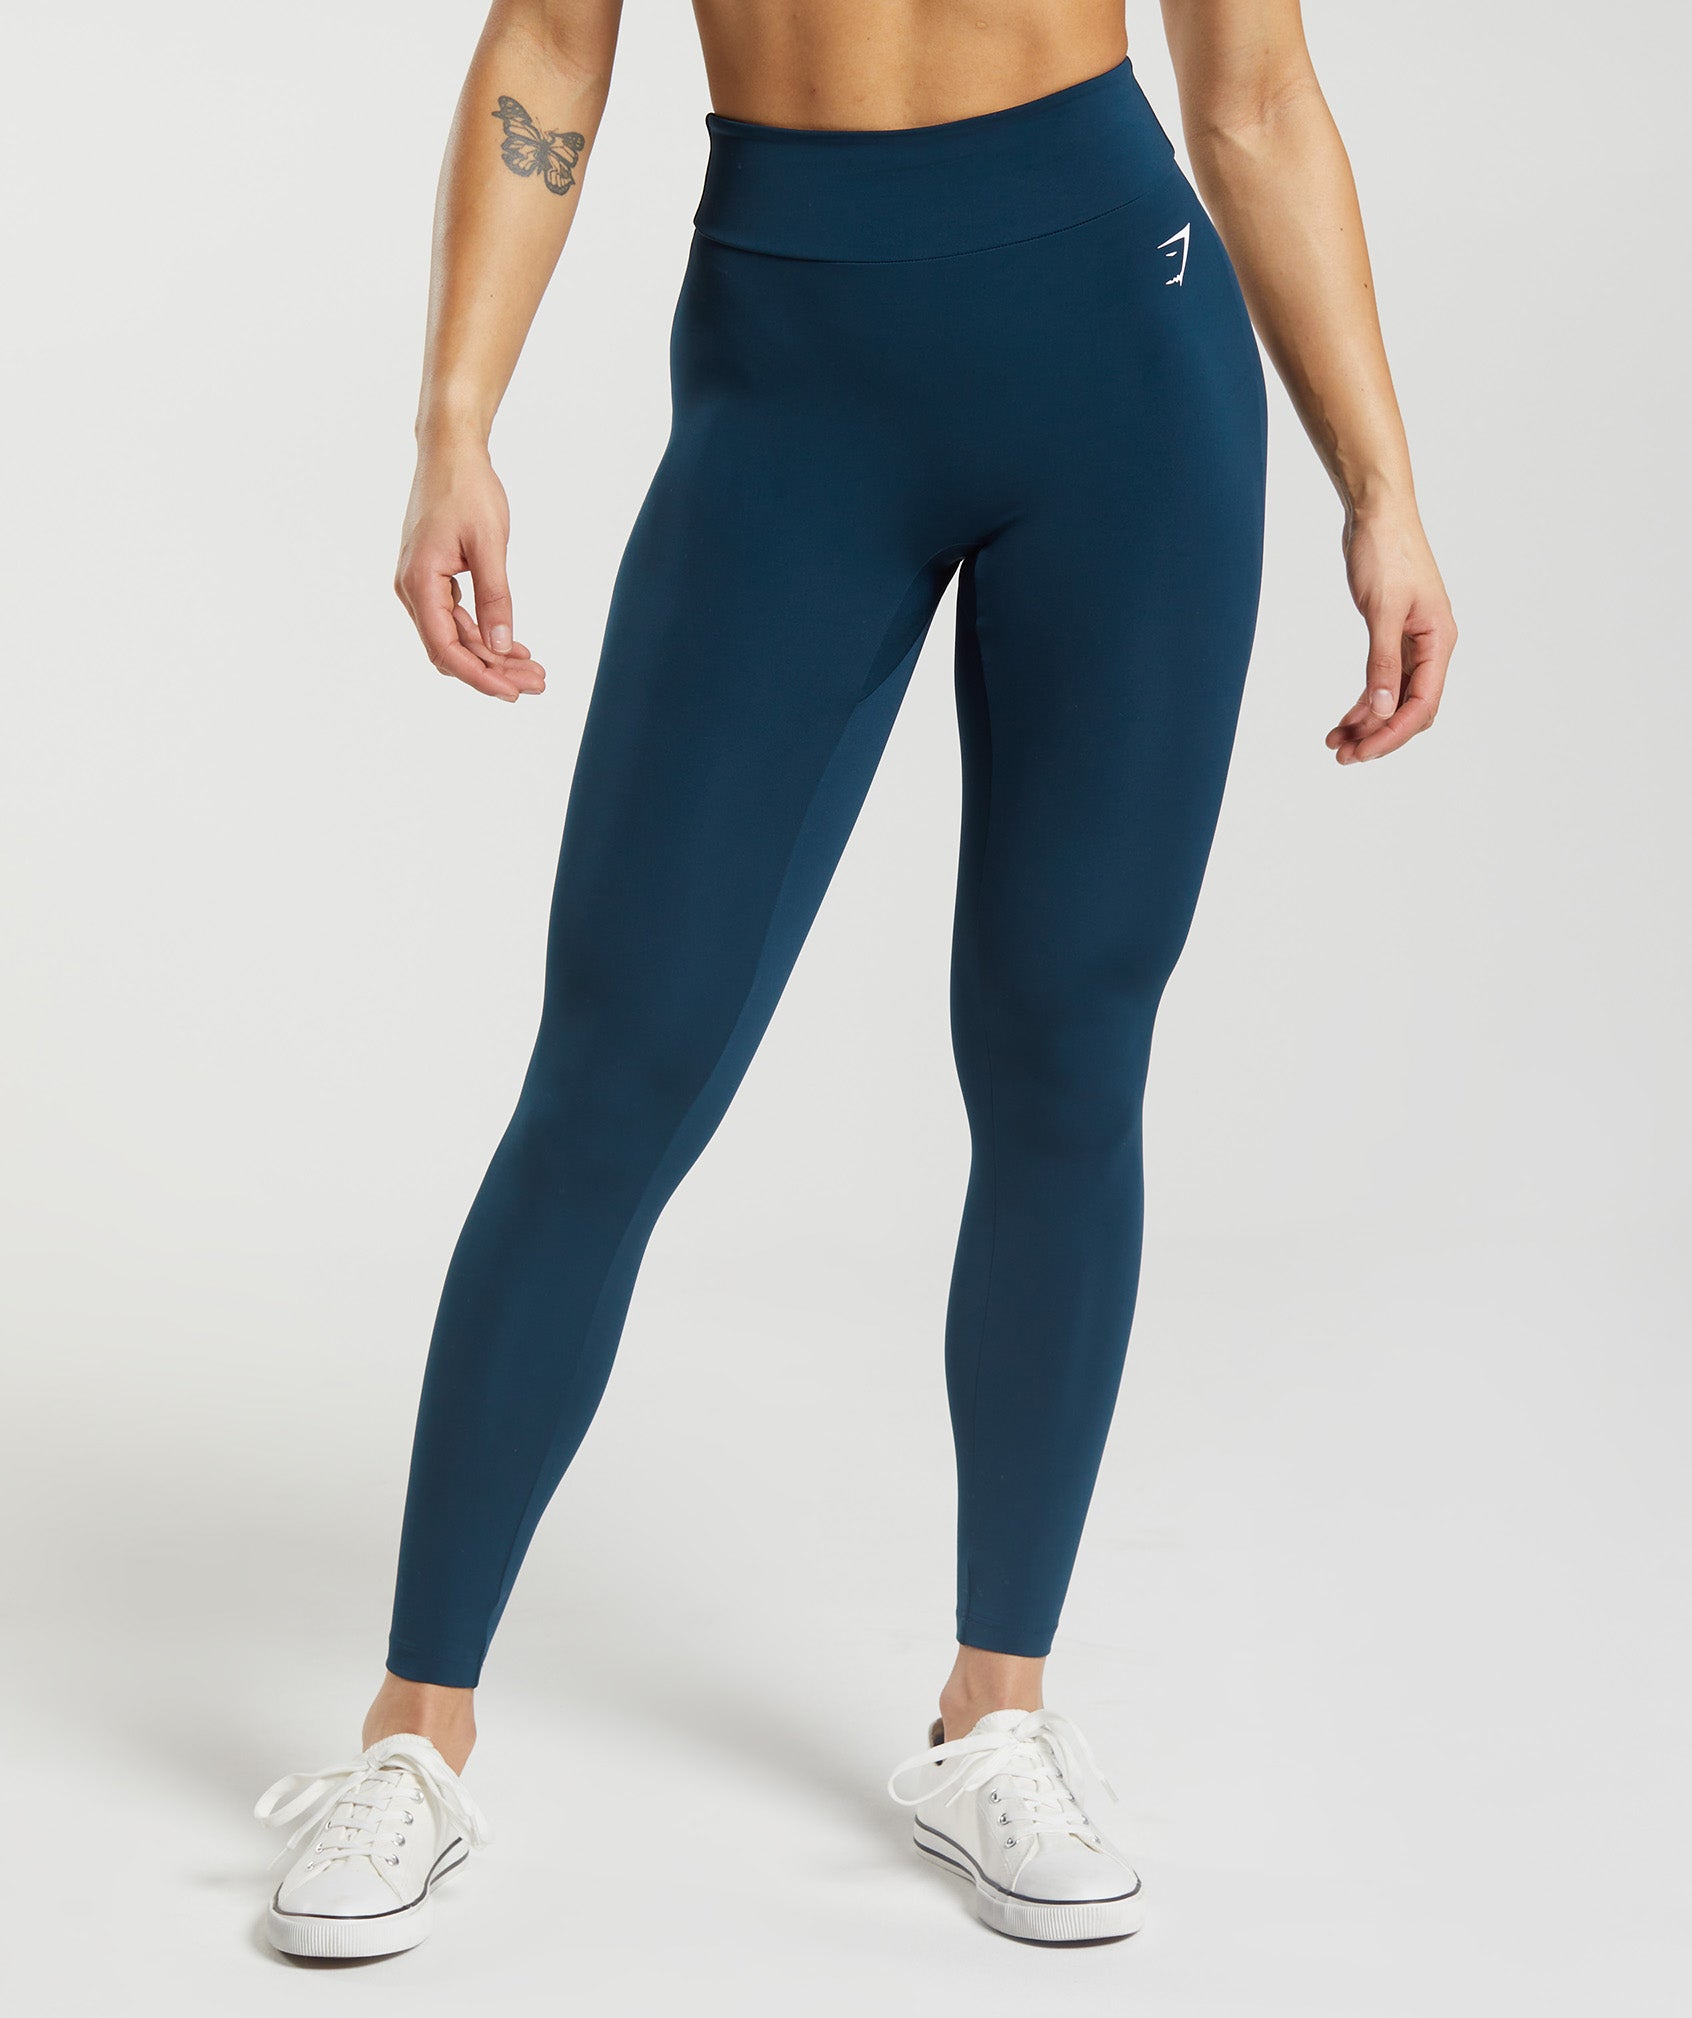 Comprar Sexy Scrunch Leggings medias realzadoras mujer leggins de deporte  para gimnasio mujeres Fitness Legging mujer Leggins